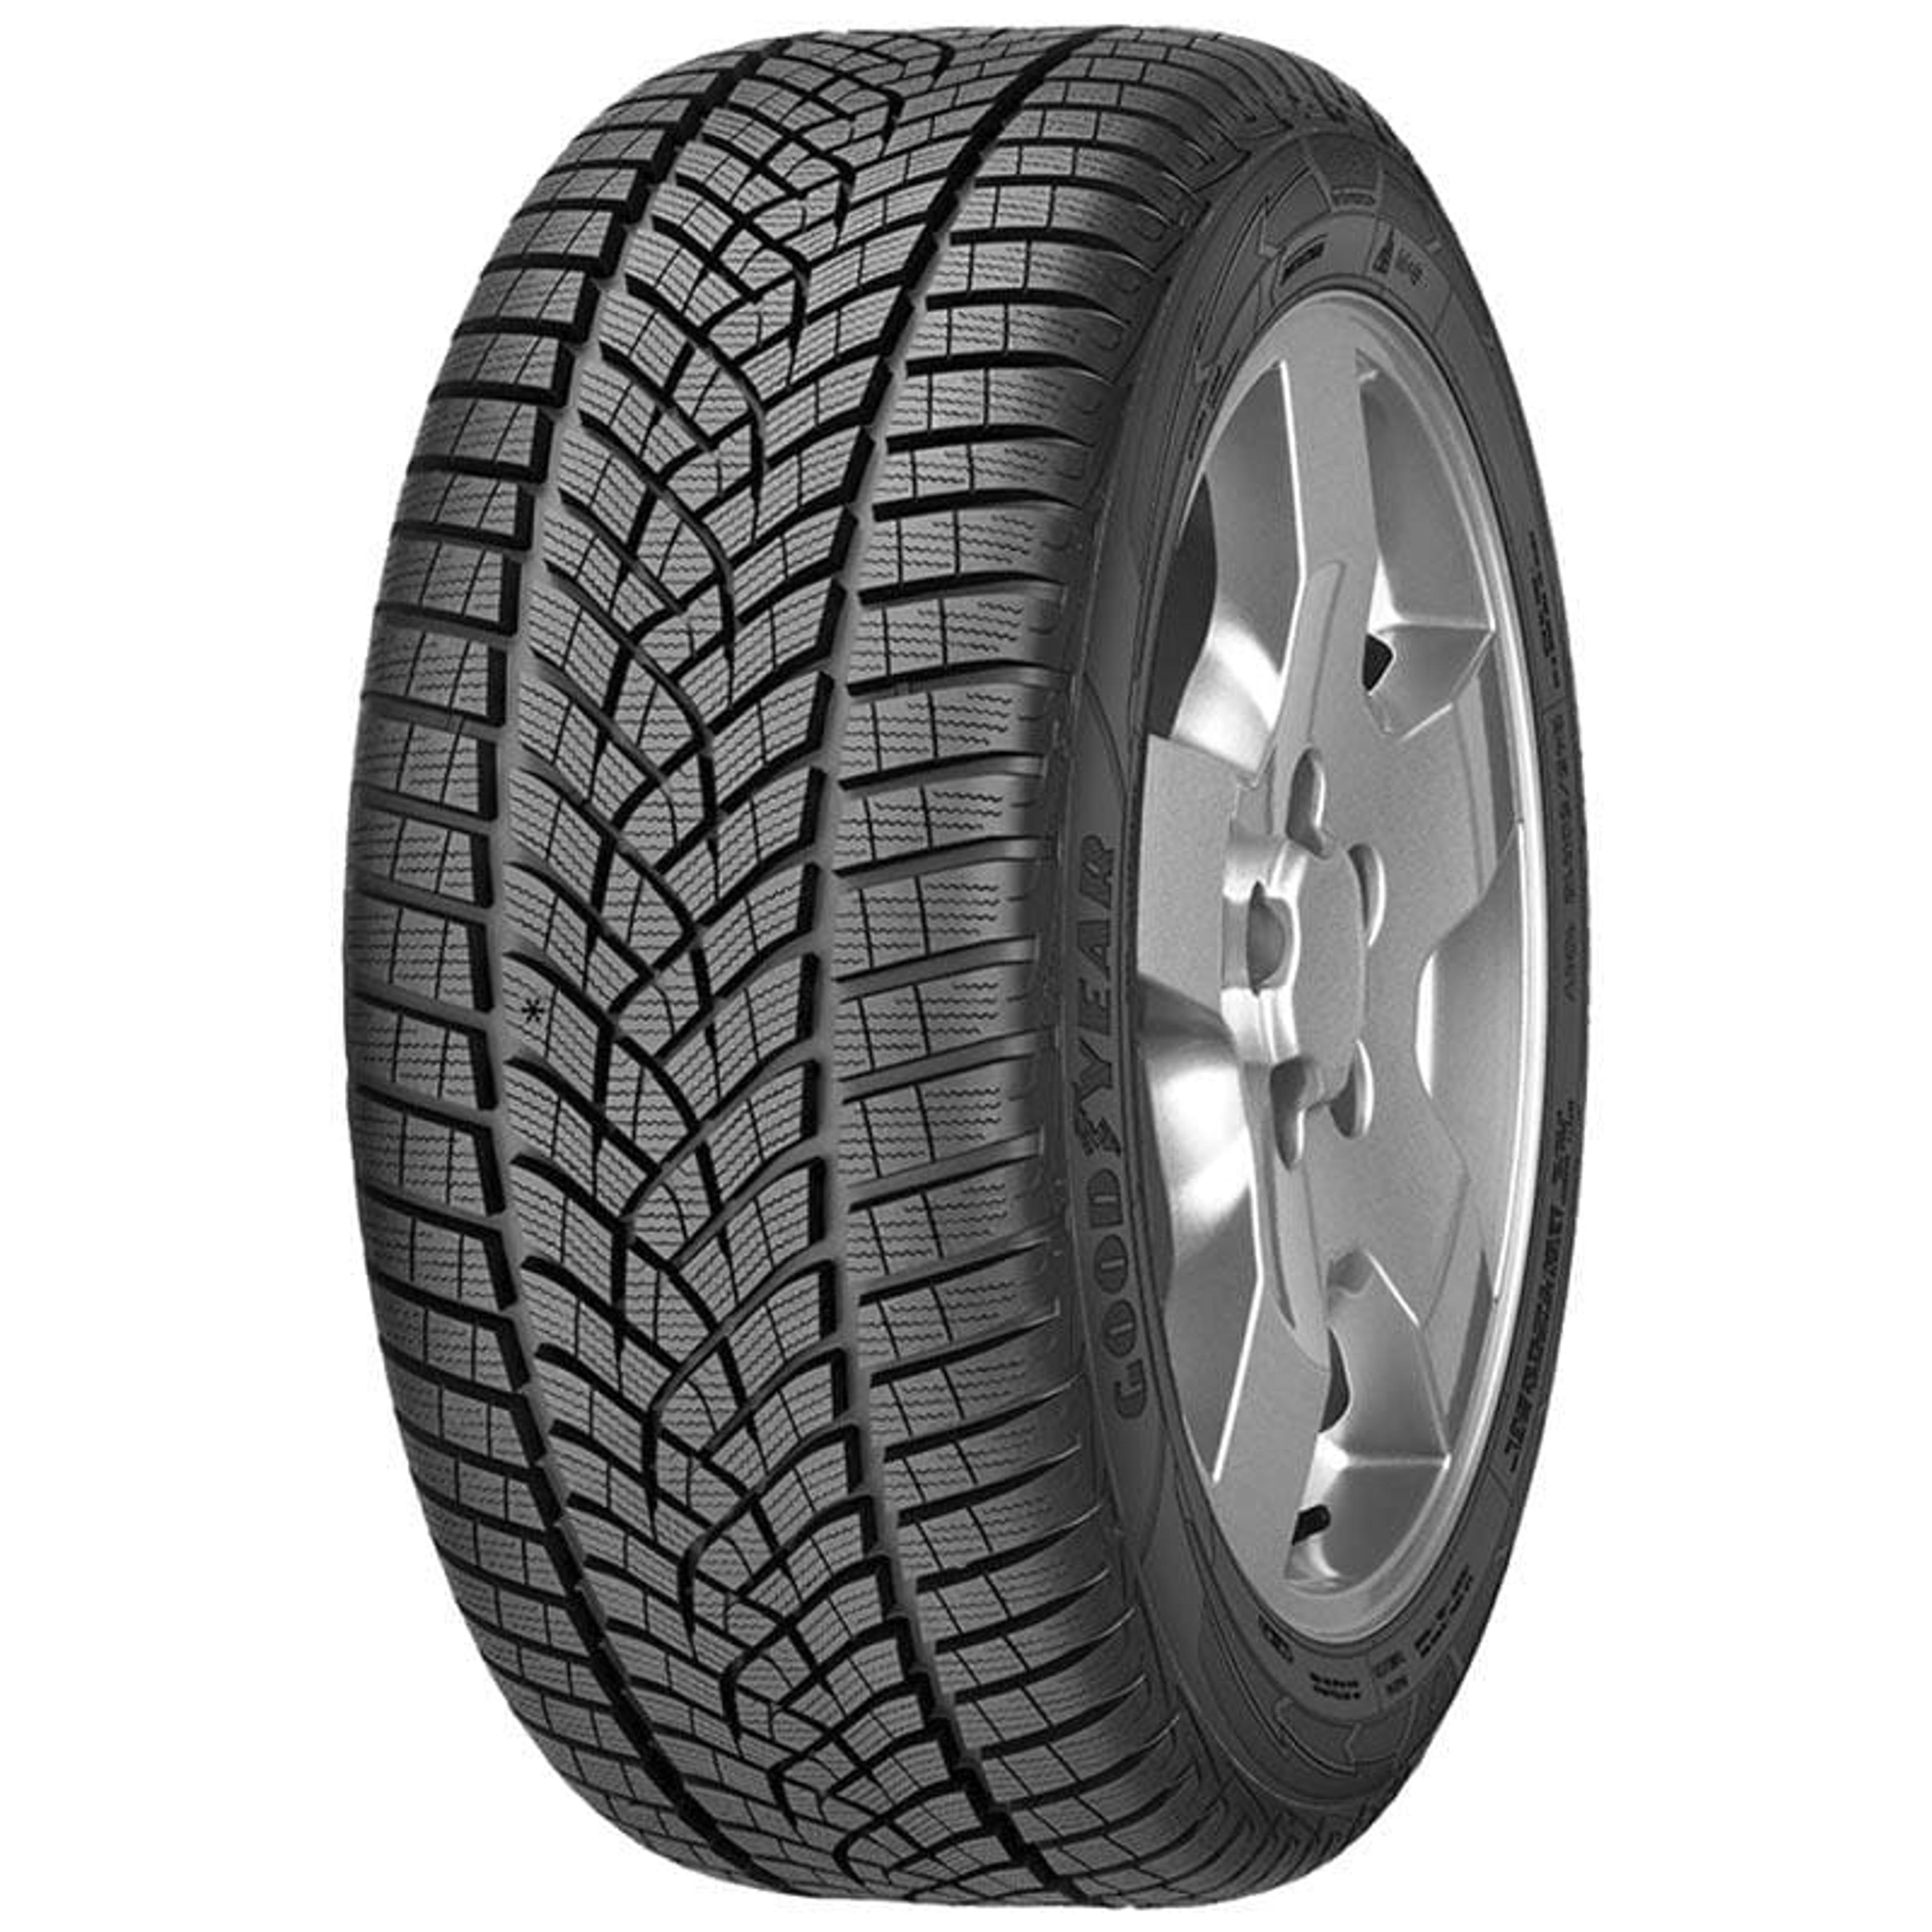 SimpleTire Plus Tires Performance | Grip Ultra Online Buy Goodyear